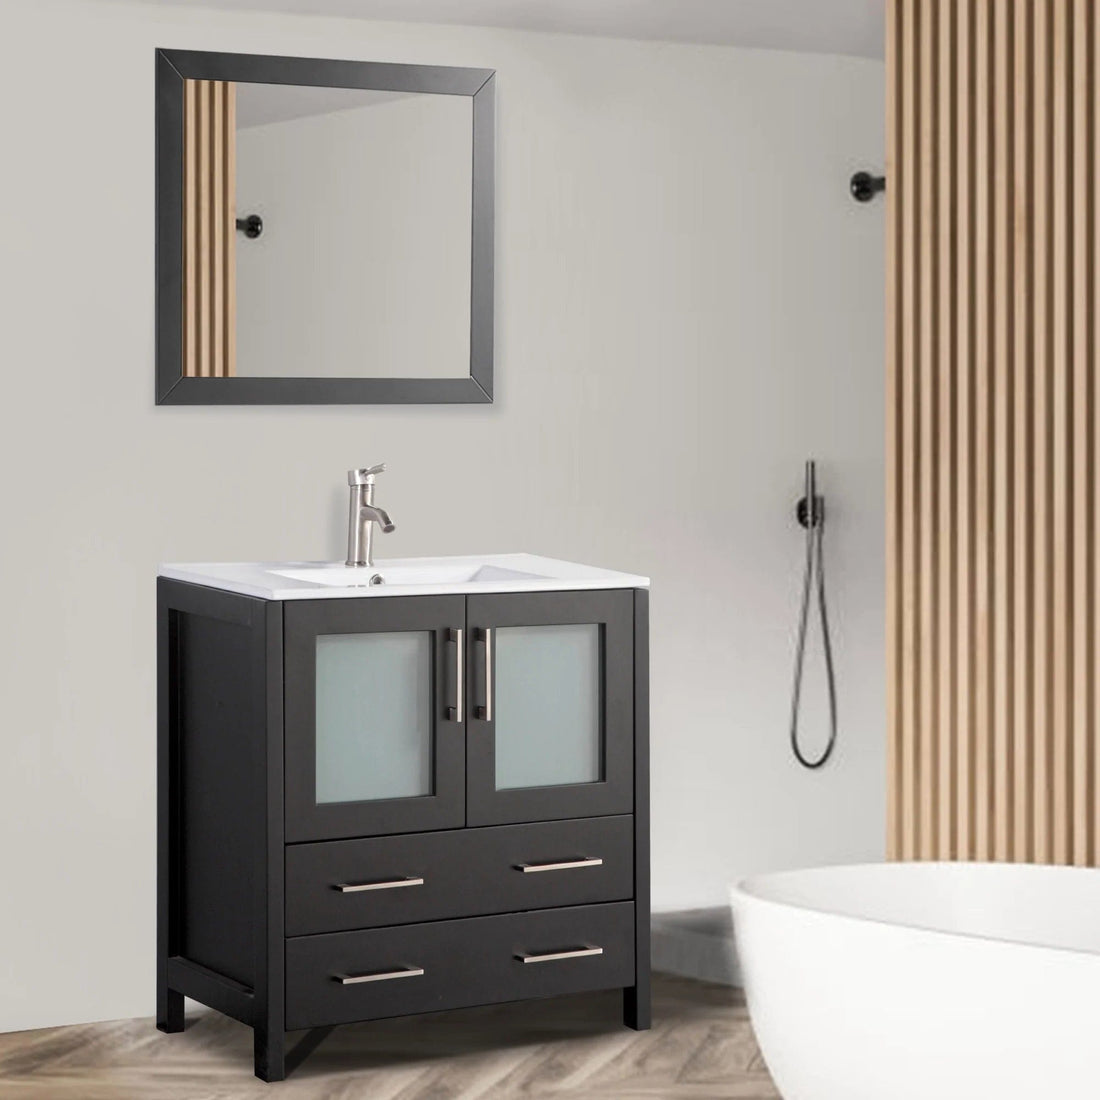 24 in. Single Sink Bathroom Vanity Compact Set in Espresso